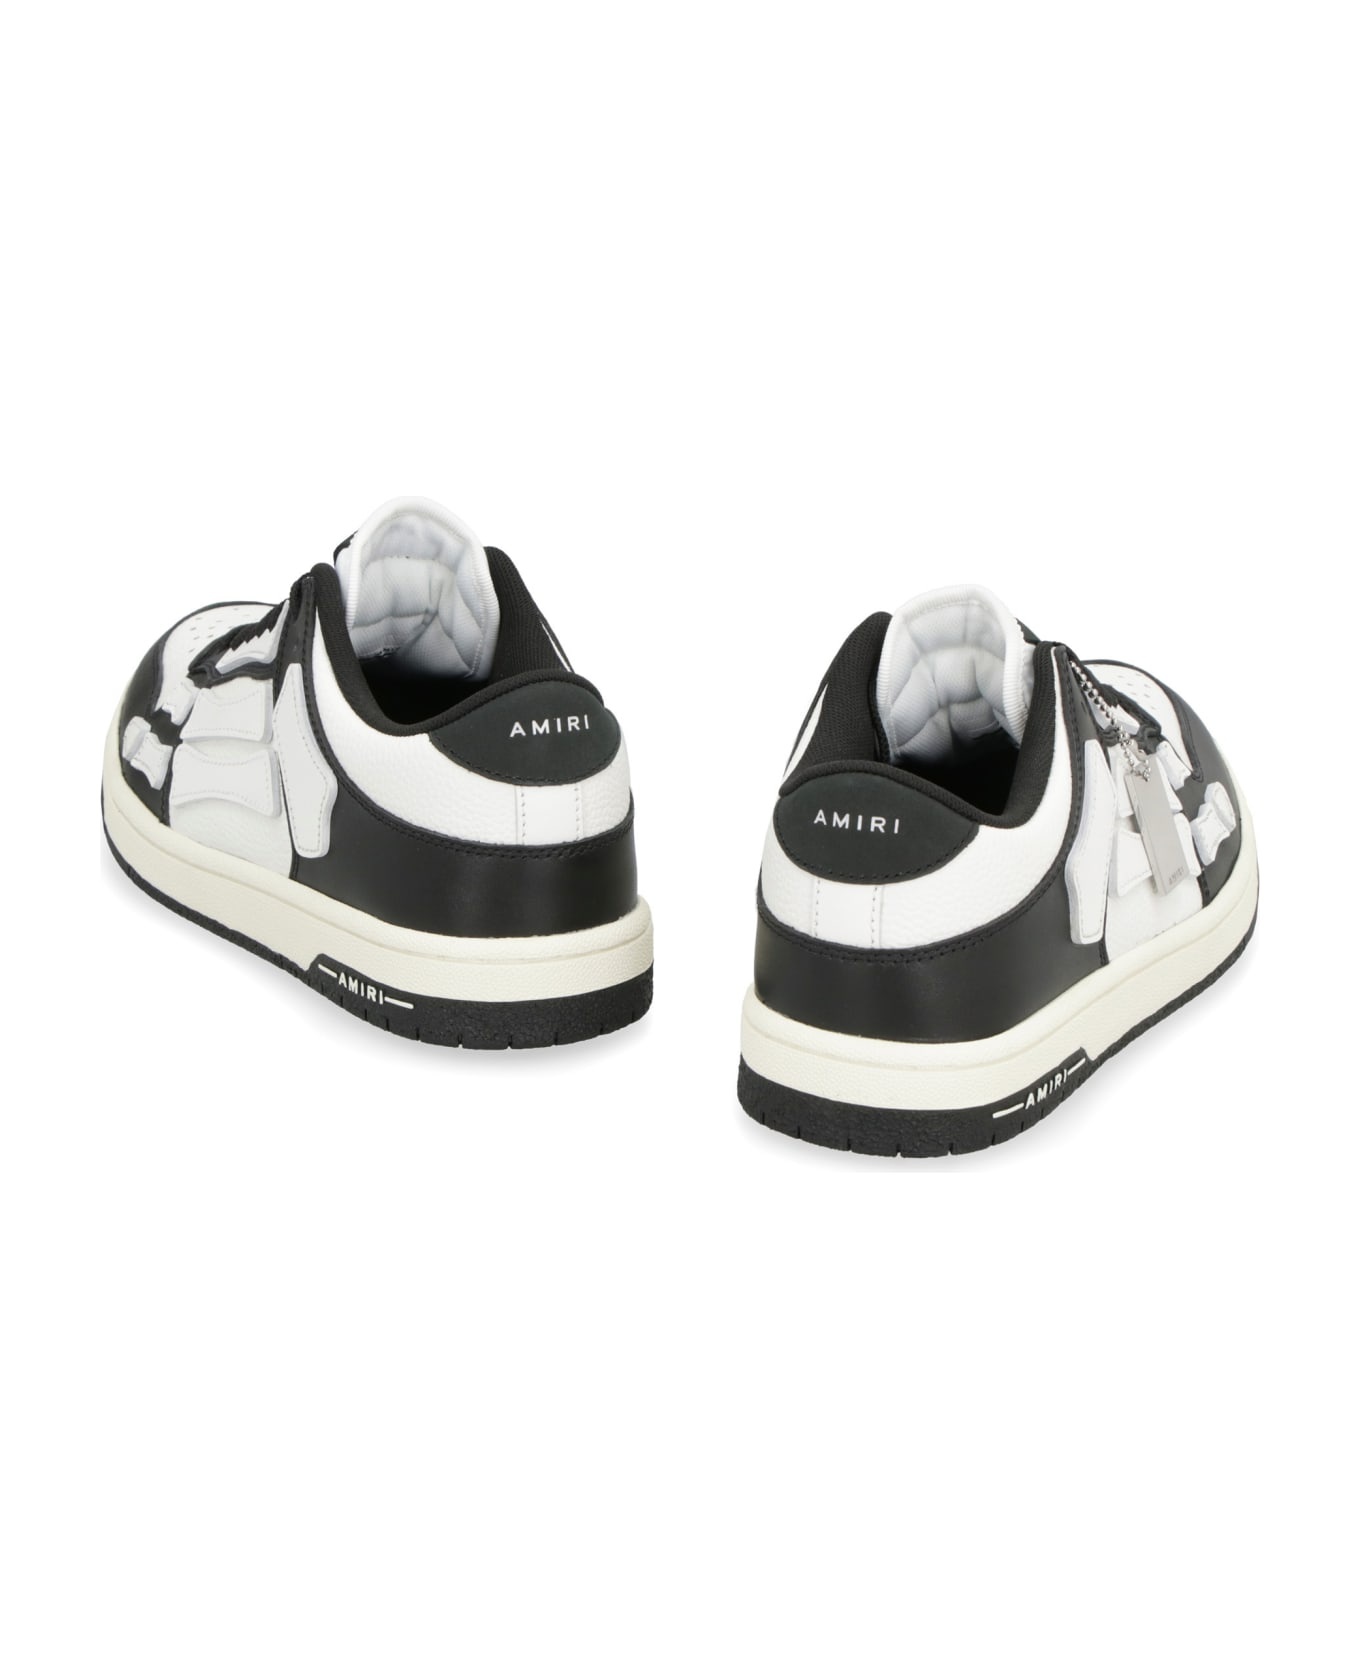 Black And White Skel Low Sneakers - 4